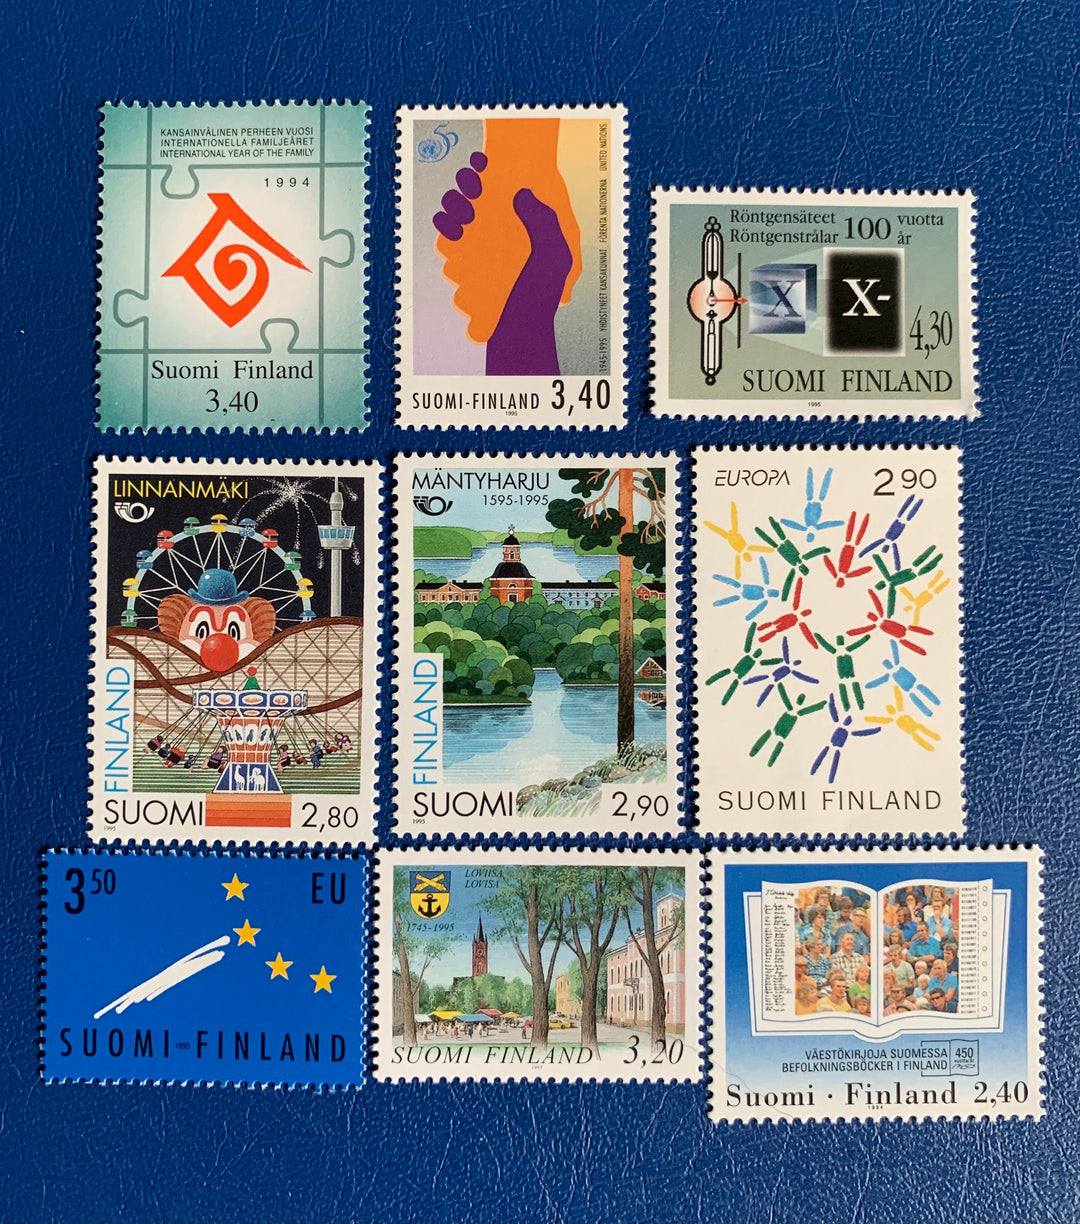 Finland - Original Vintage Postage Stamps- 1994-95 Mix - for the collector, artist or crafter - scrapbooks, journals, paper crafts